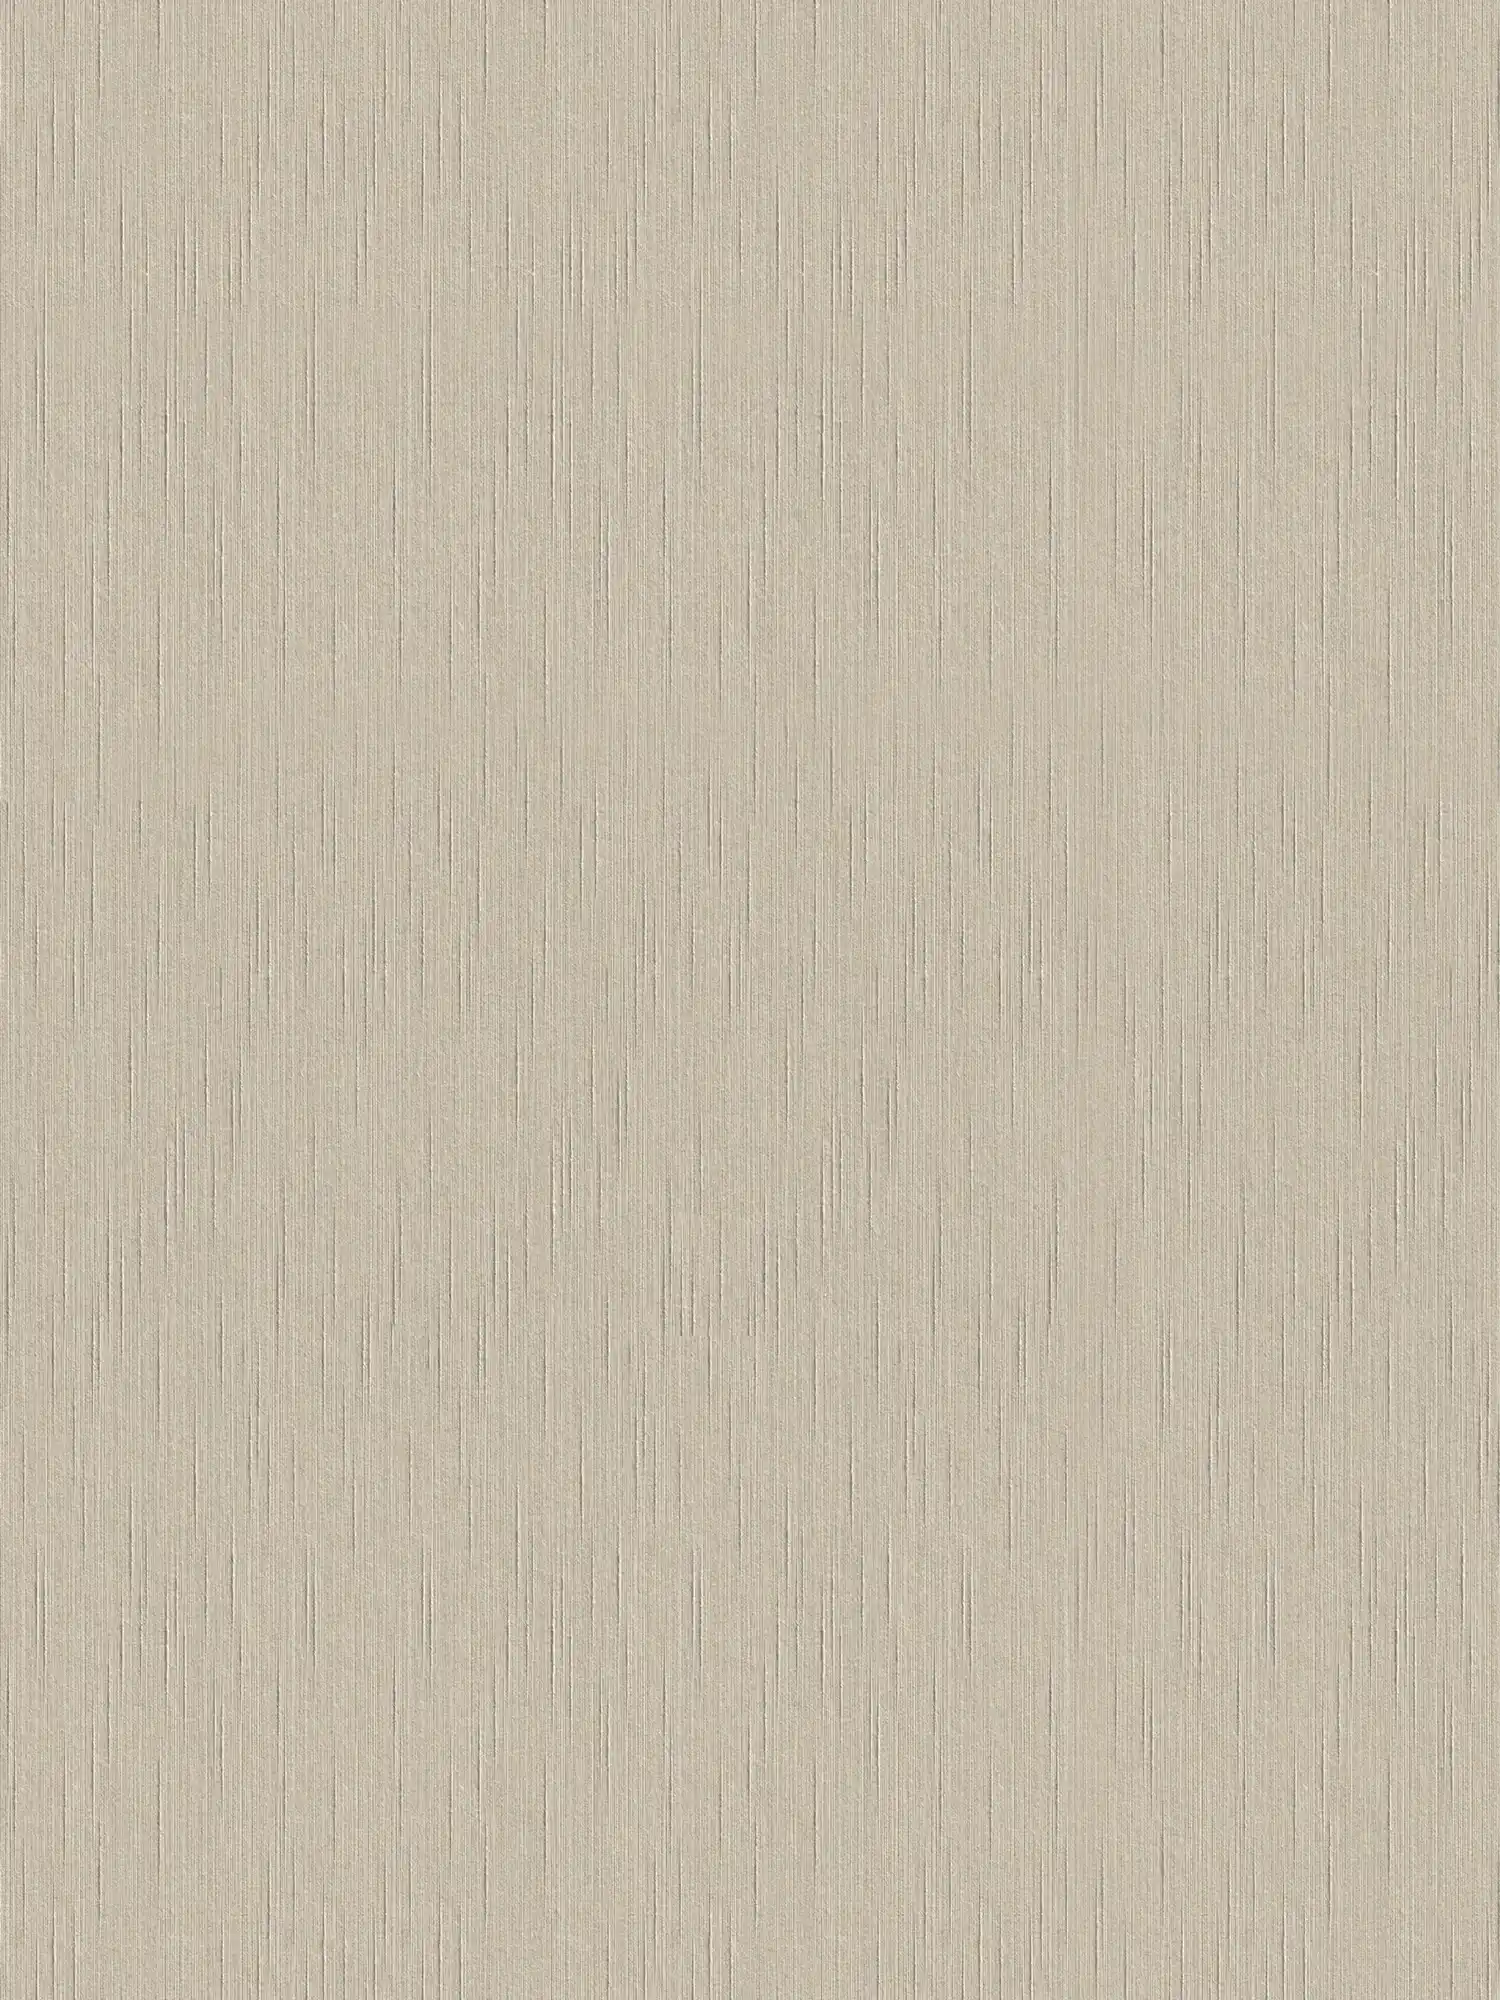 Non-woven wallpaper camel beige with textile texture
